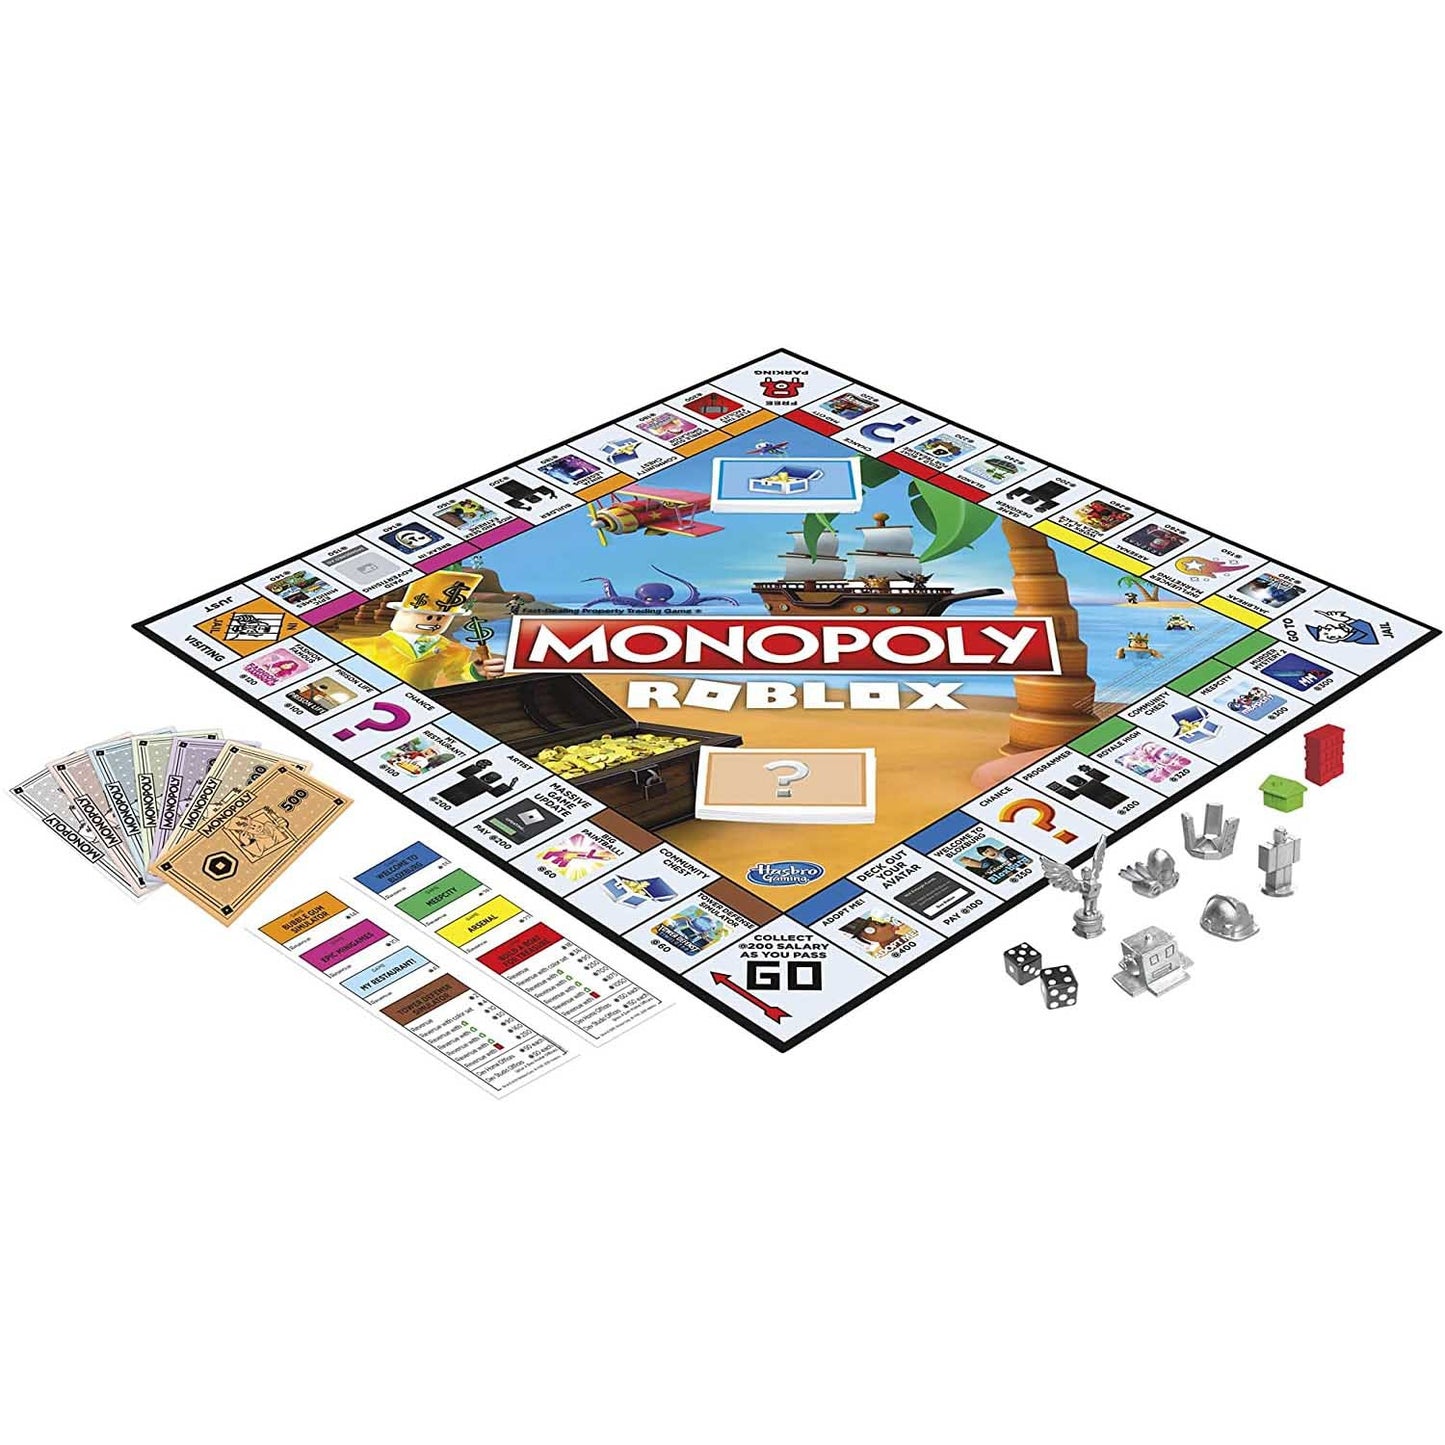 Monopoly - Édition Roblox 2022